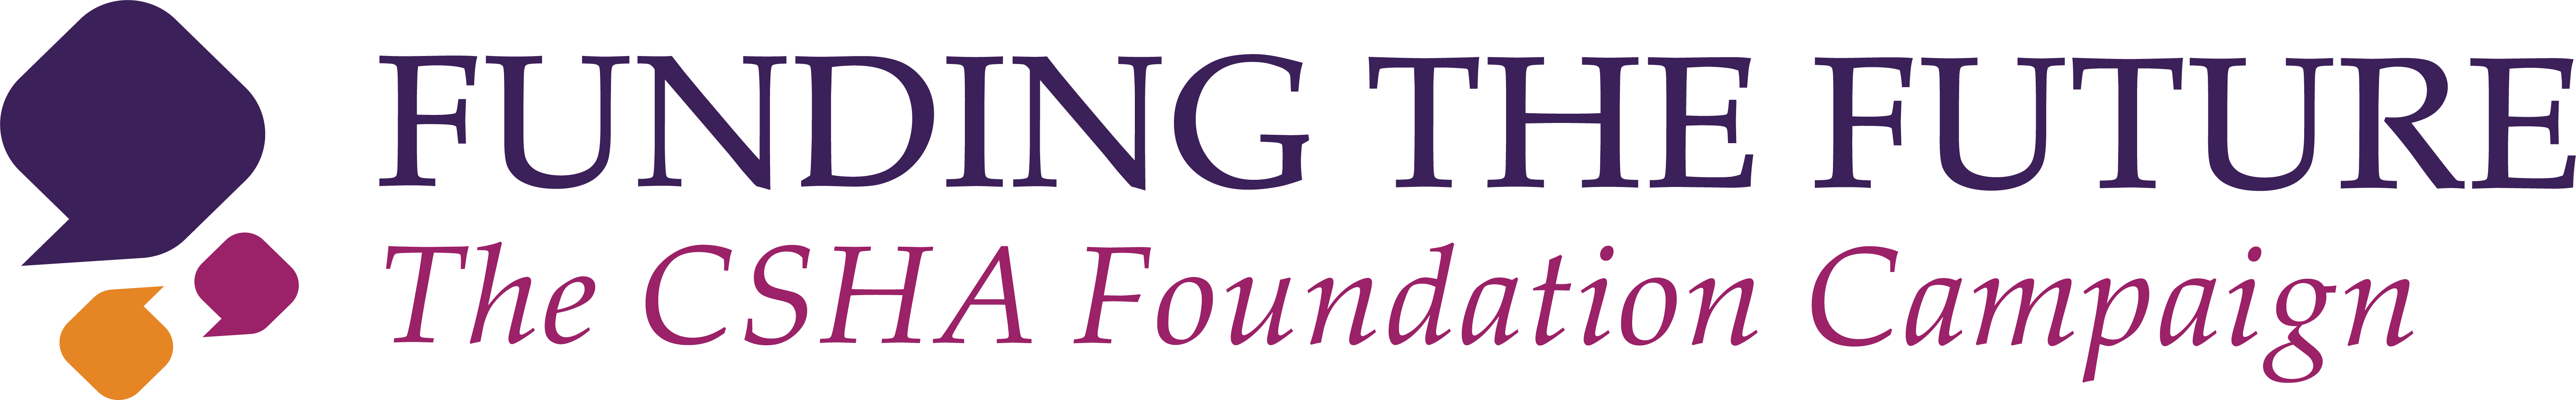 Funding the Future Campaign Logo